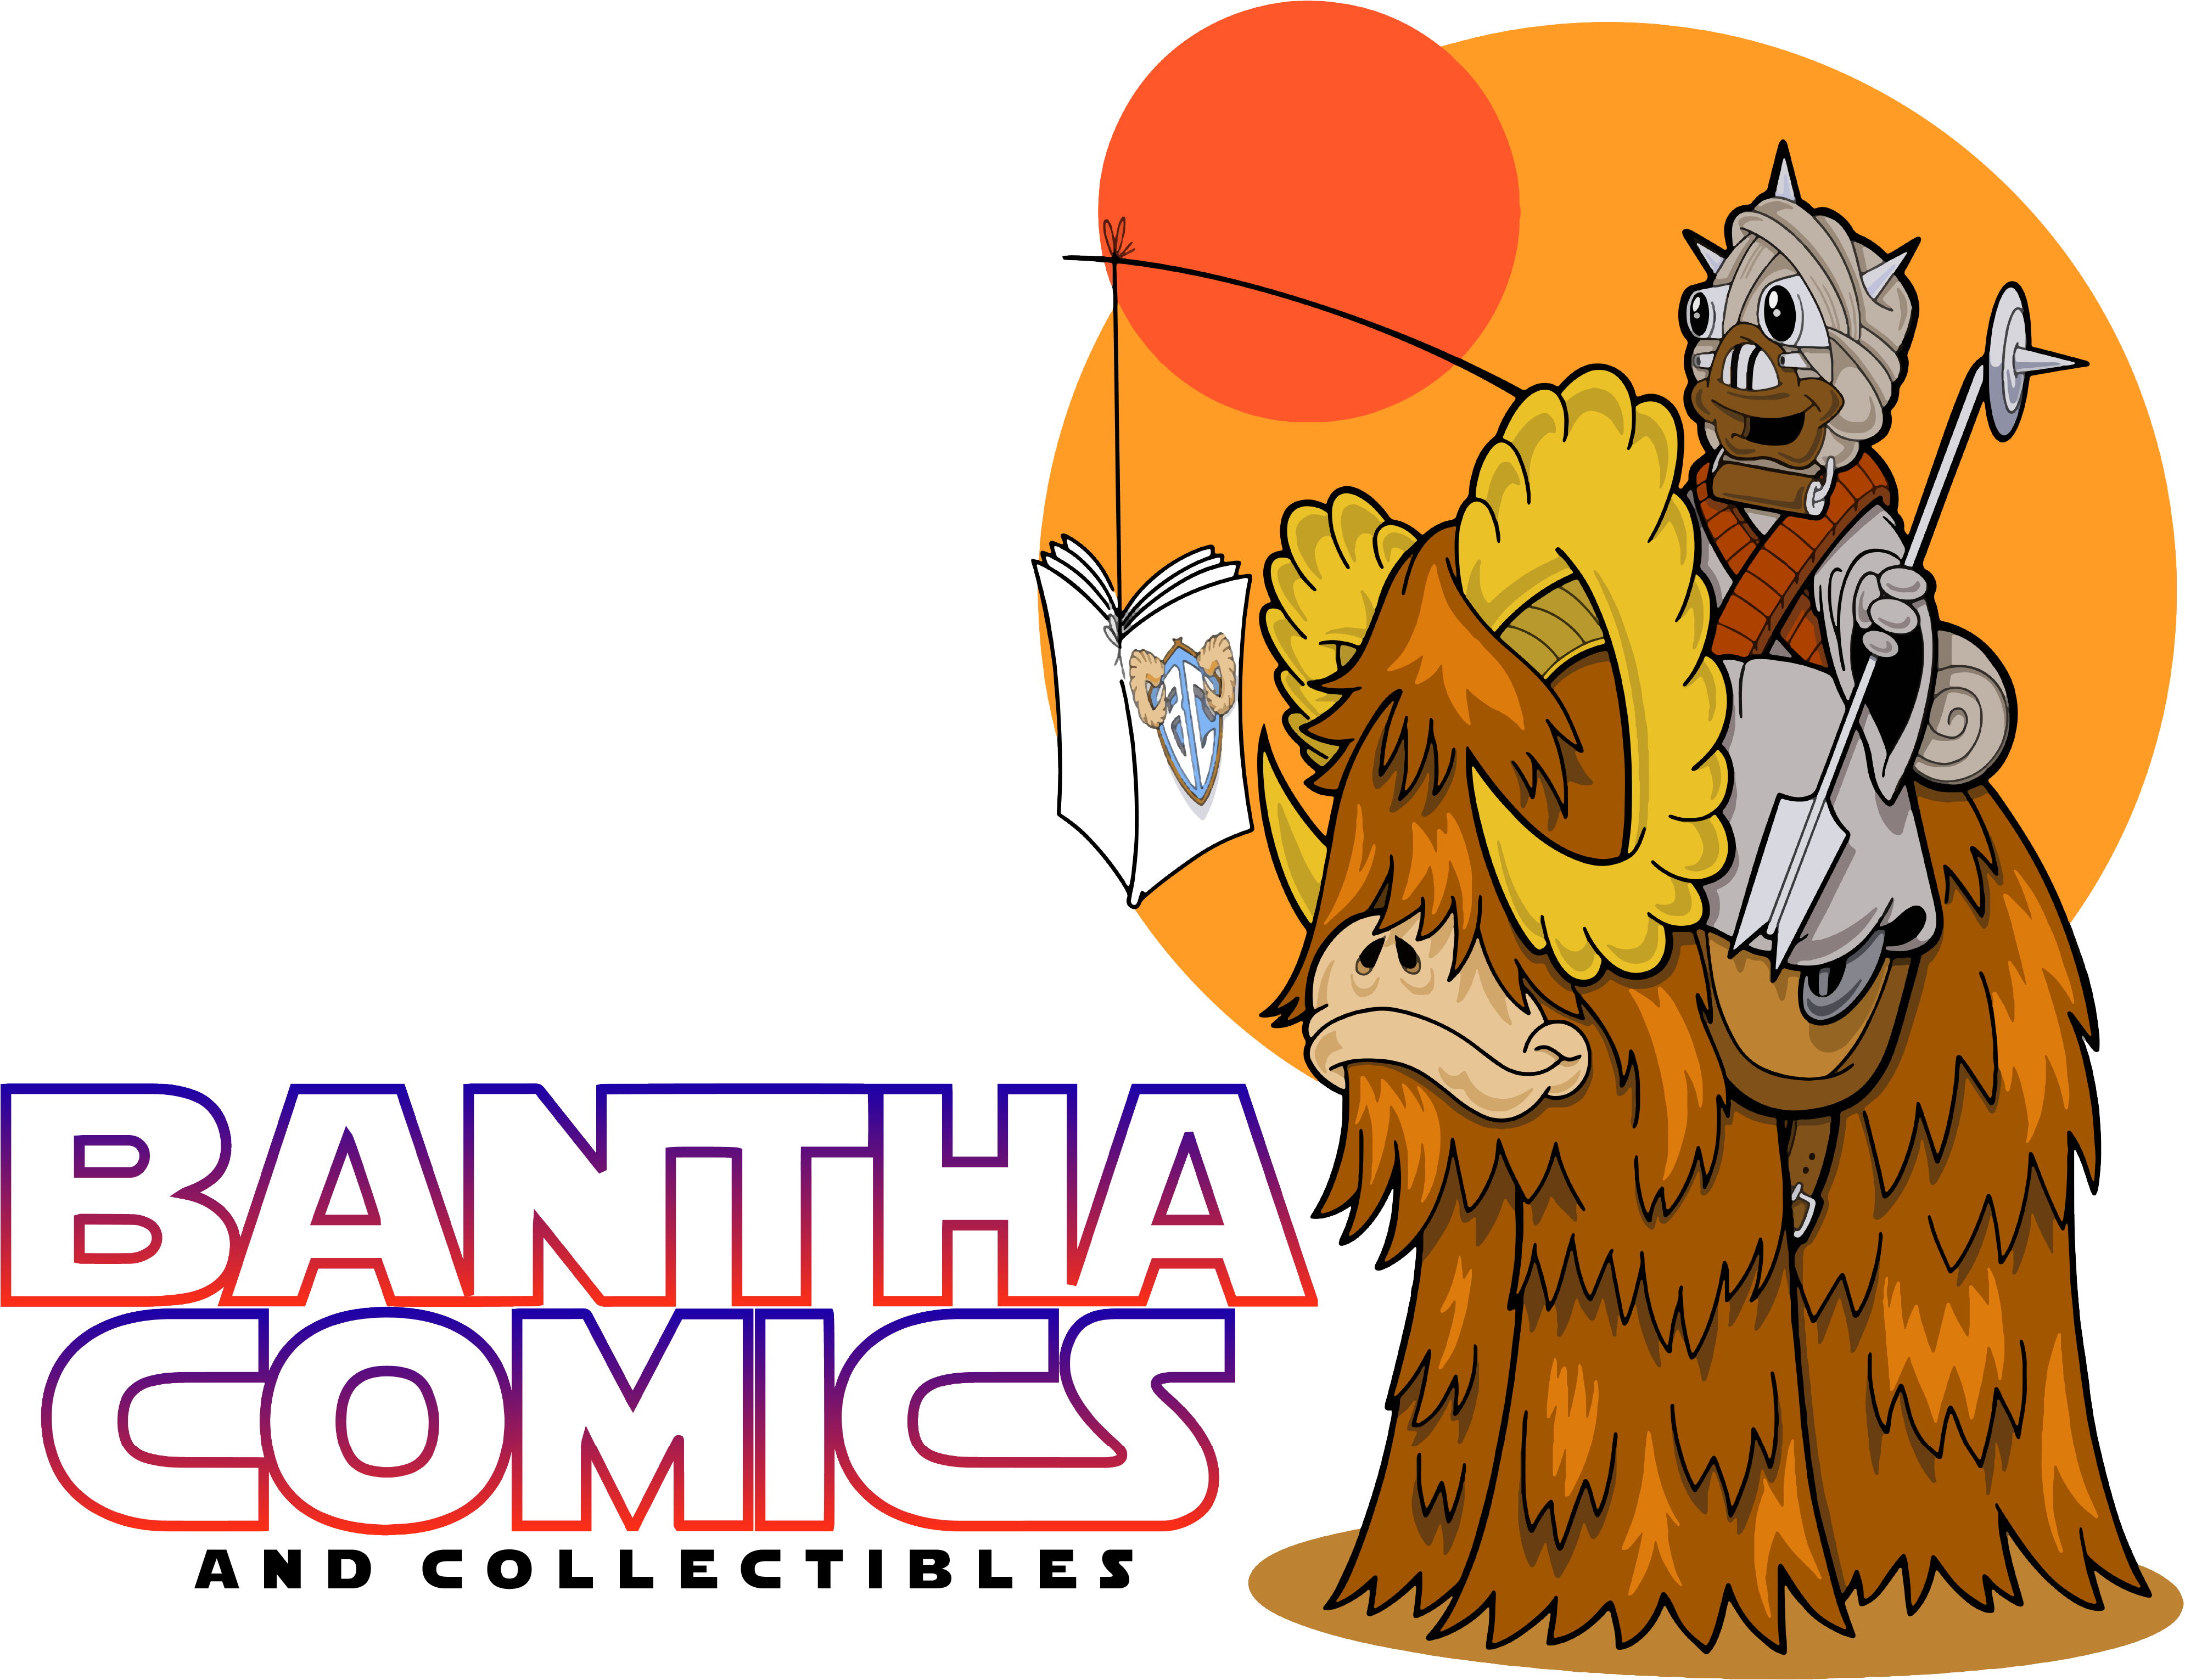 Bantha Comics and Collectibles